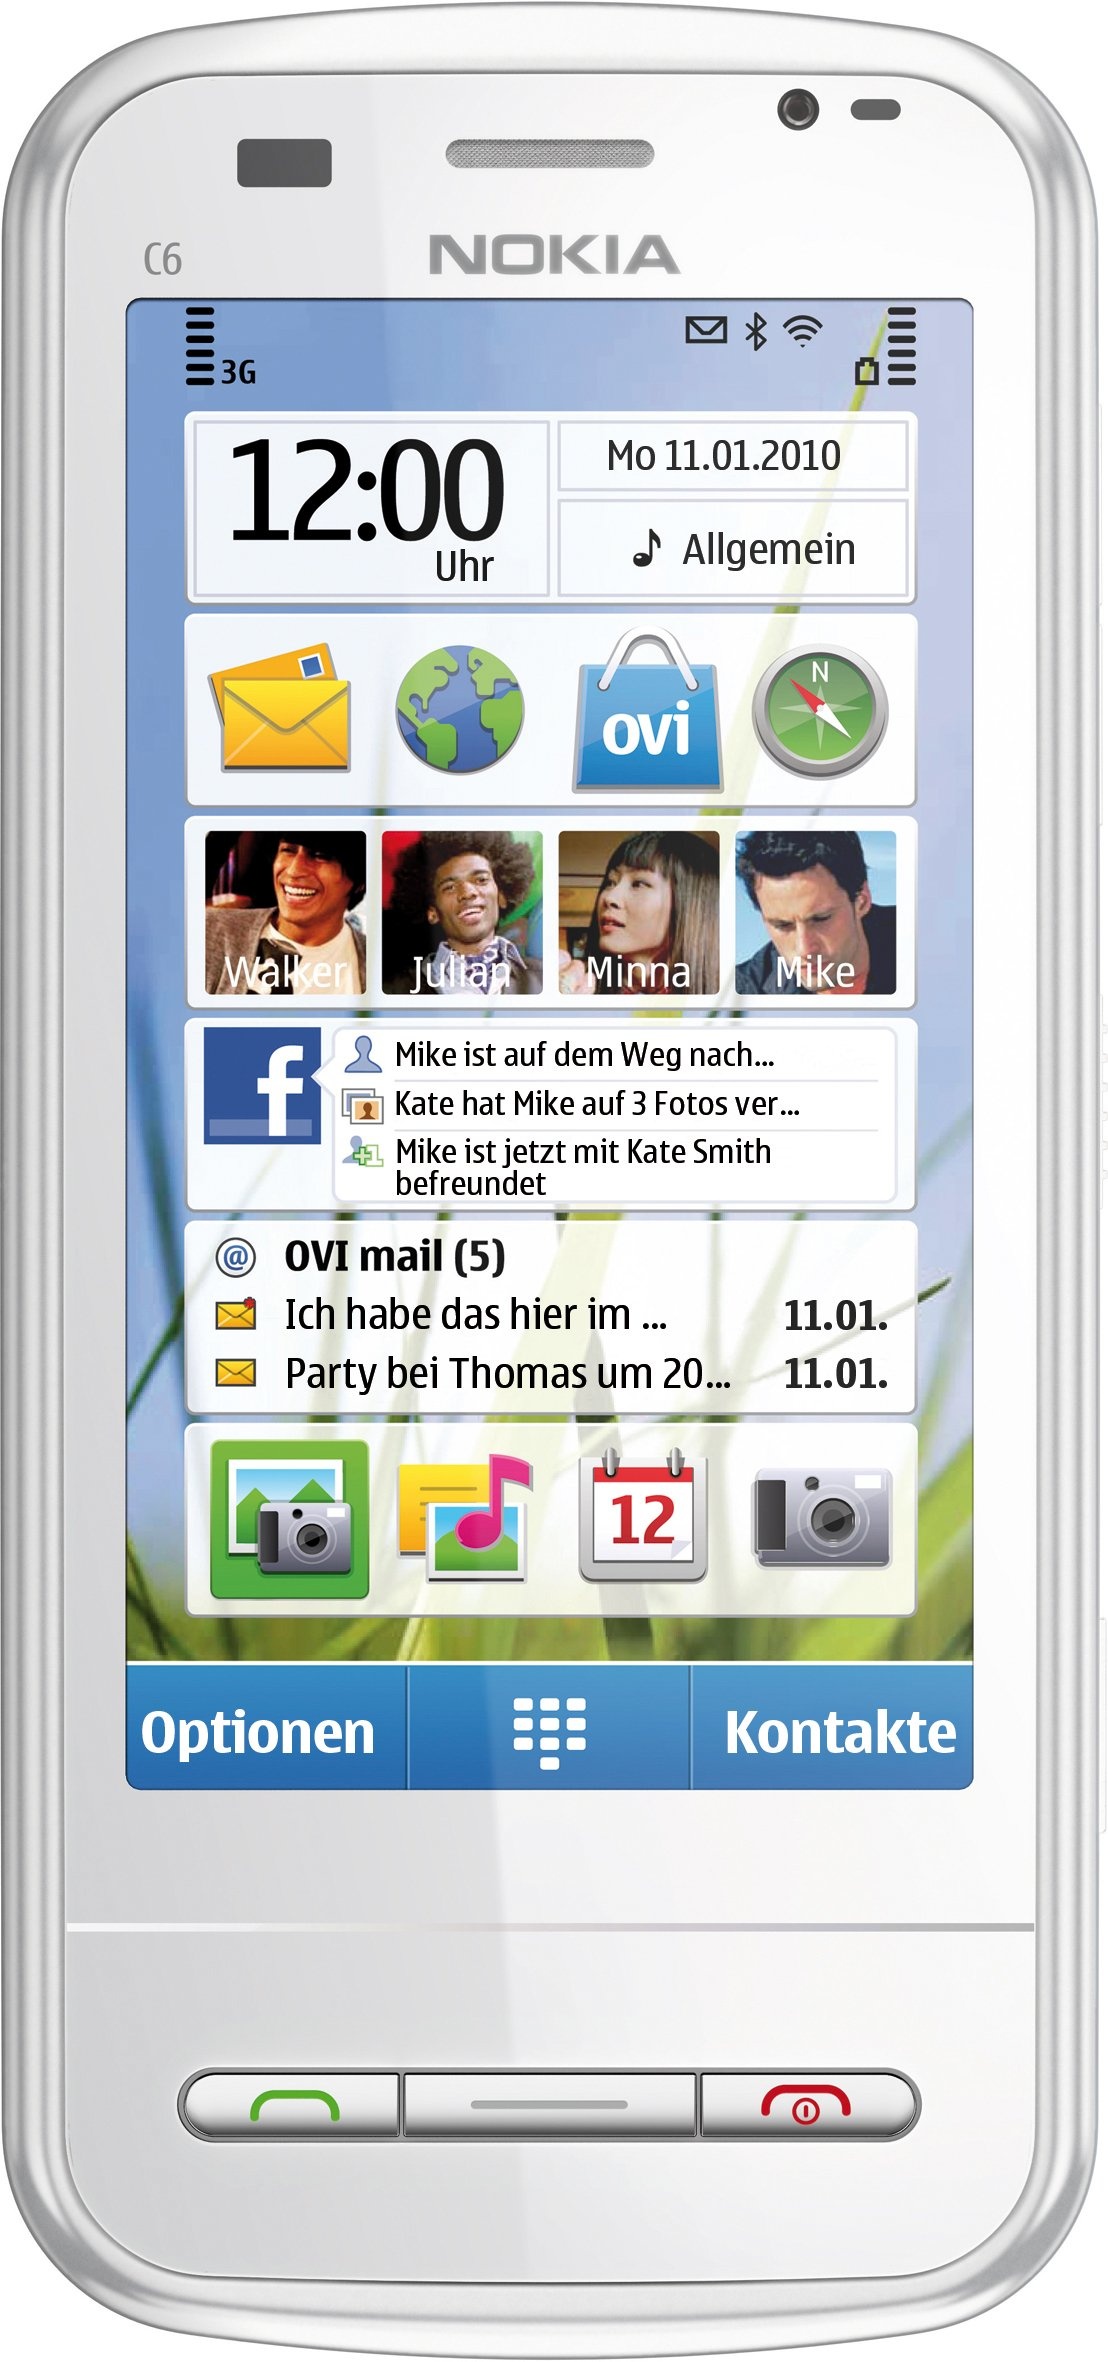 Nokia C6-00 Smartphone (8.1 cm (3.2 Zoll) Display, QWERTZ-Tastatur, Touchscreen, 5 Megapixel Kamera) weiß